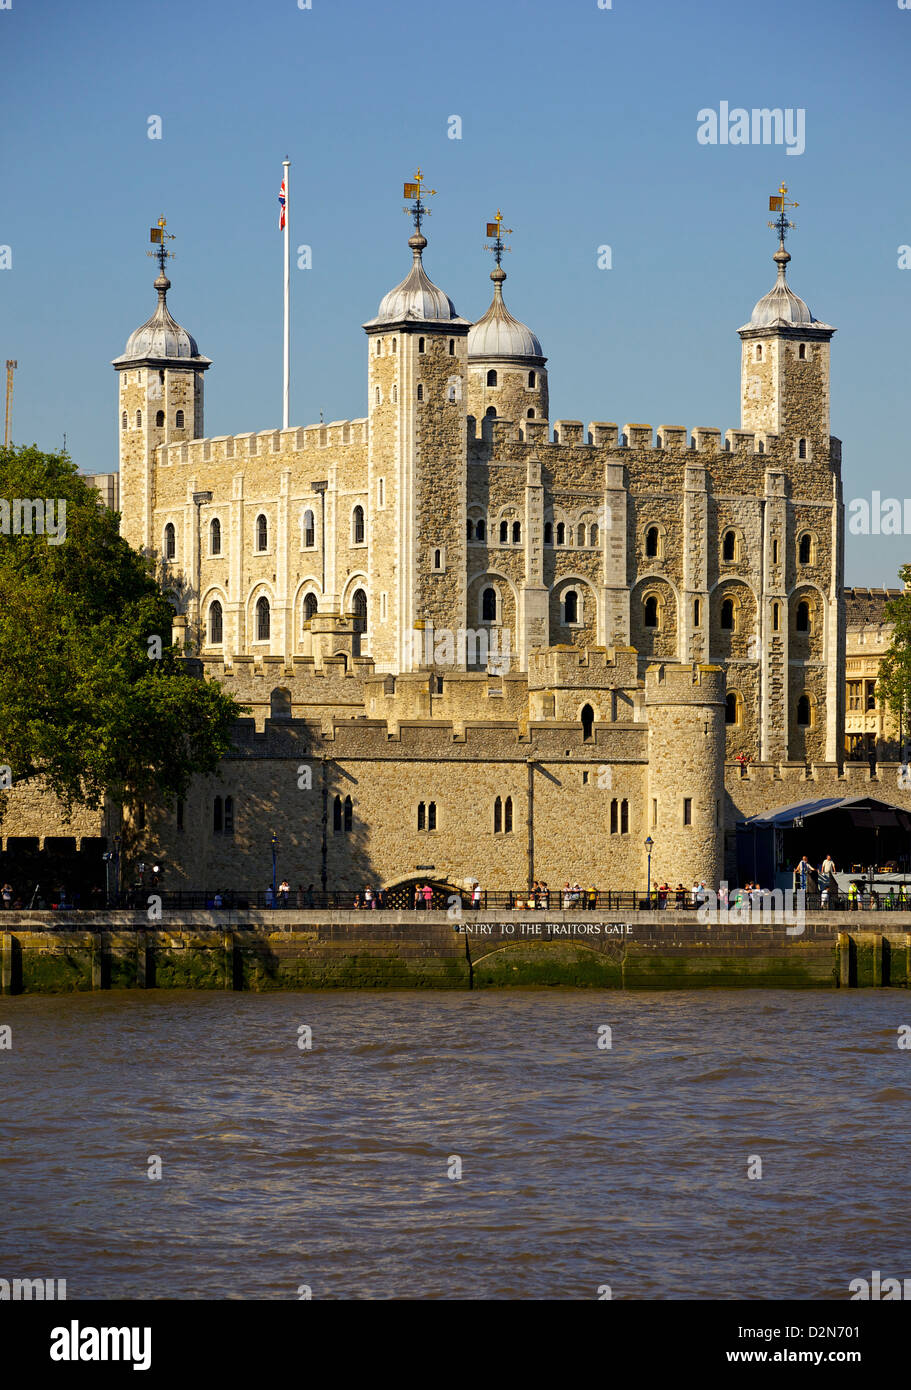 The Tower of London, UNESCO World Heritage Site, London, England, United Kingdom, Europe Stock Photo